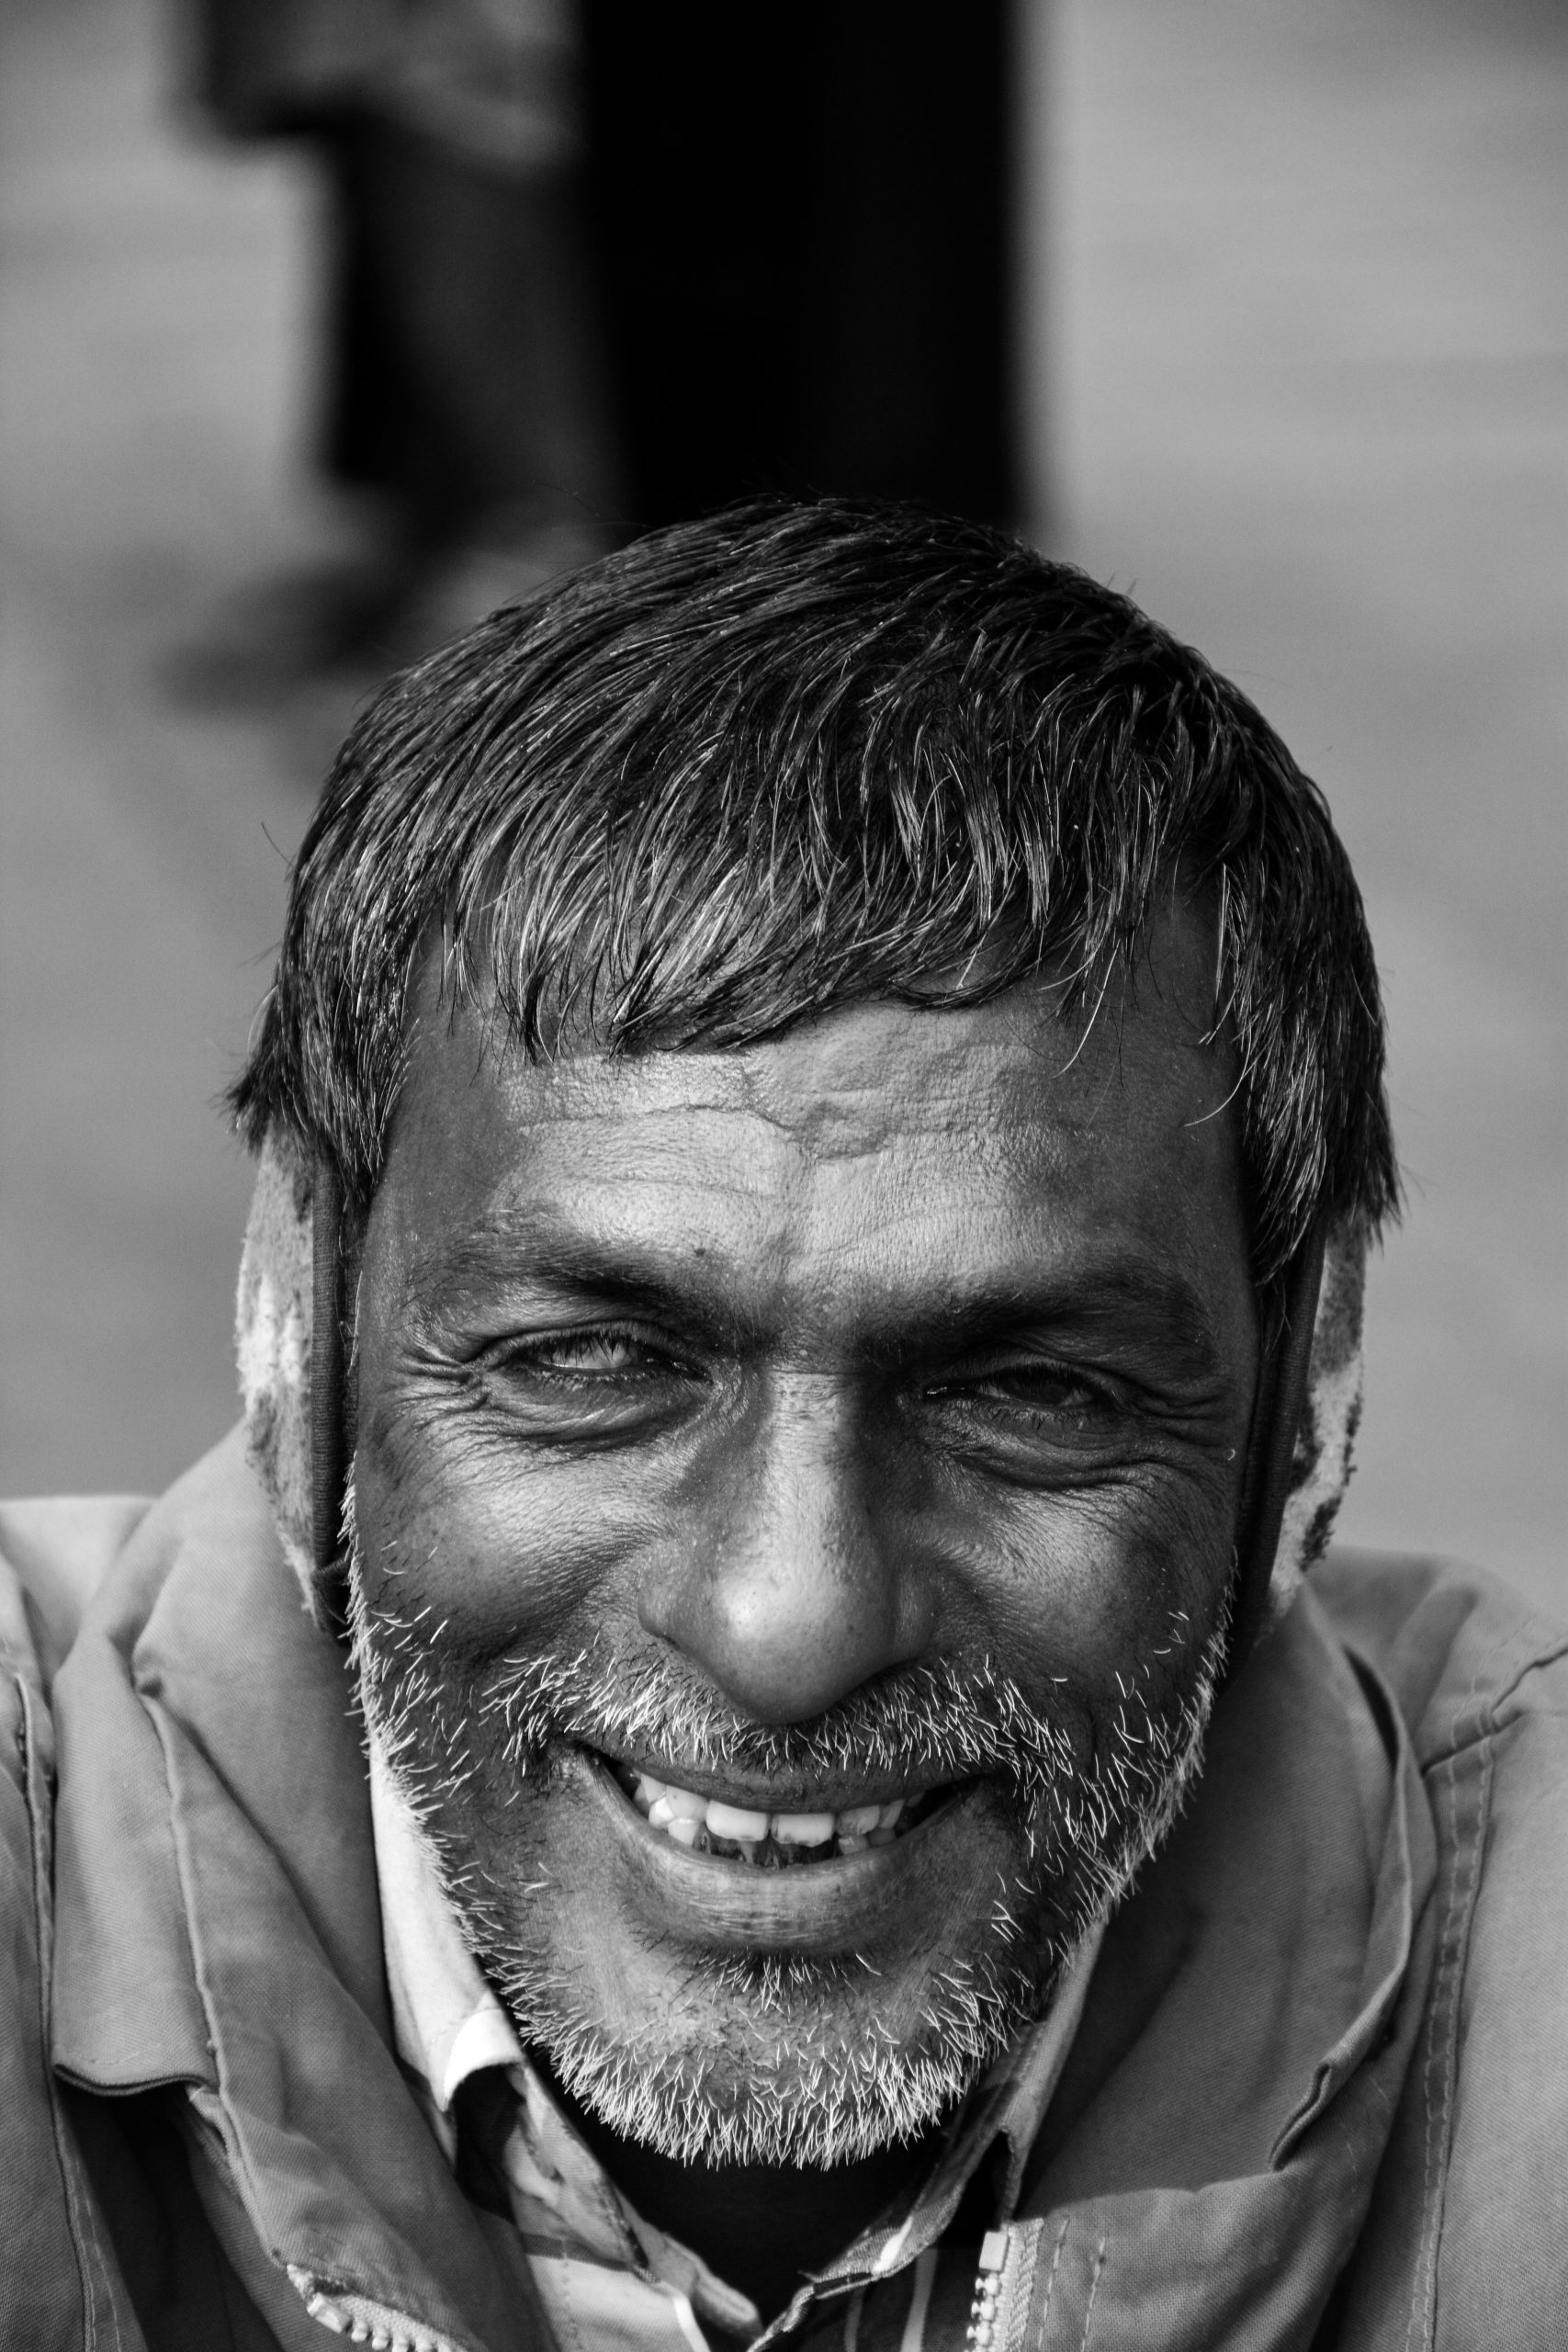 Portrait of a happy man